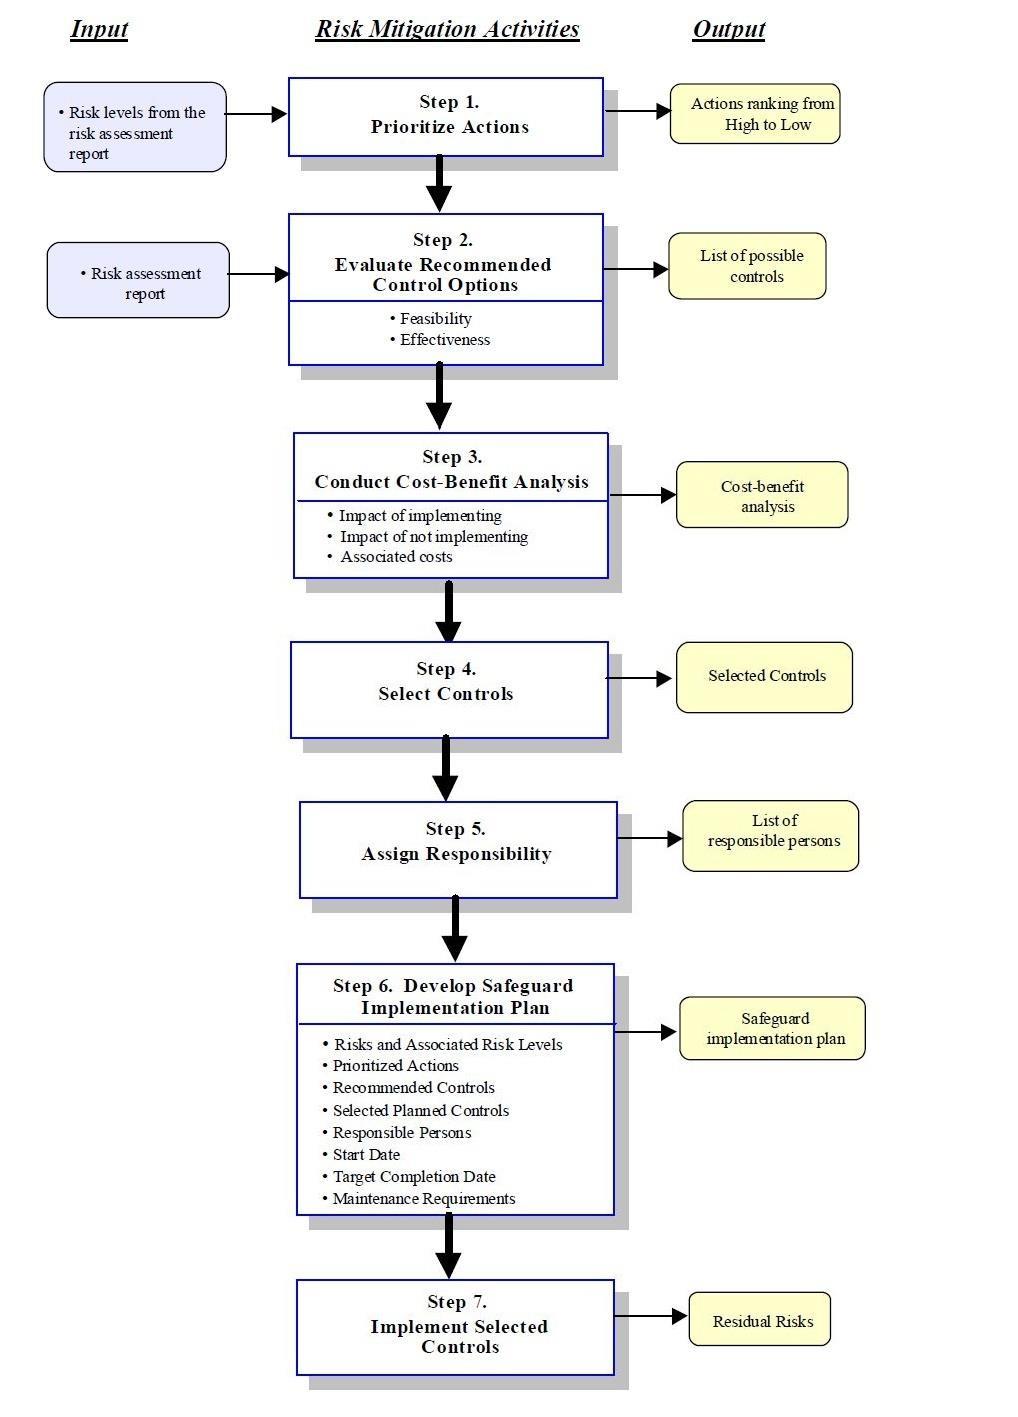 Figure Risk Mitigation Methodology Flowchart (Source: Risk Management Guide for Information Technology Systems, NIST Special Publication) INDIAN SOFTWARE DEVELOPMENT INDUSTRY ORGANIZATION Adolescence